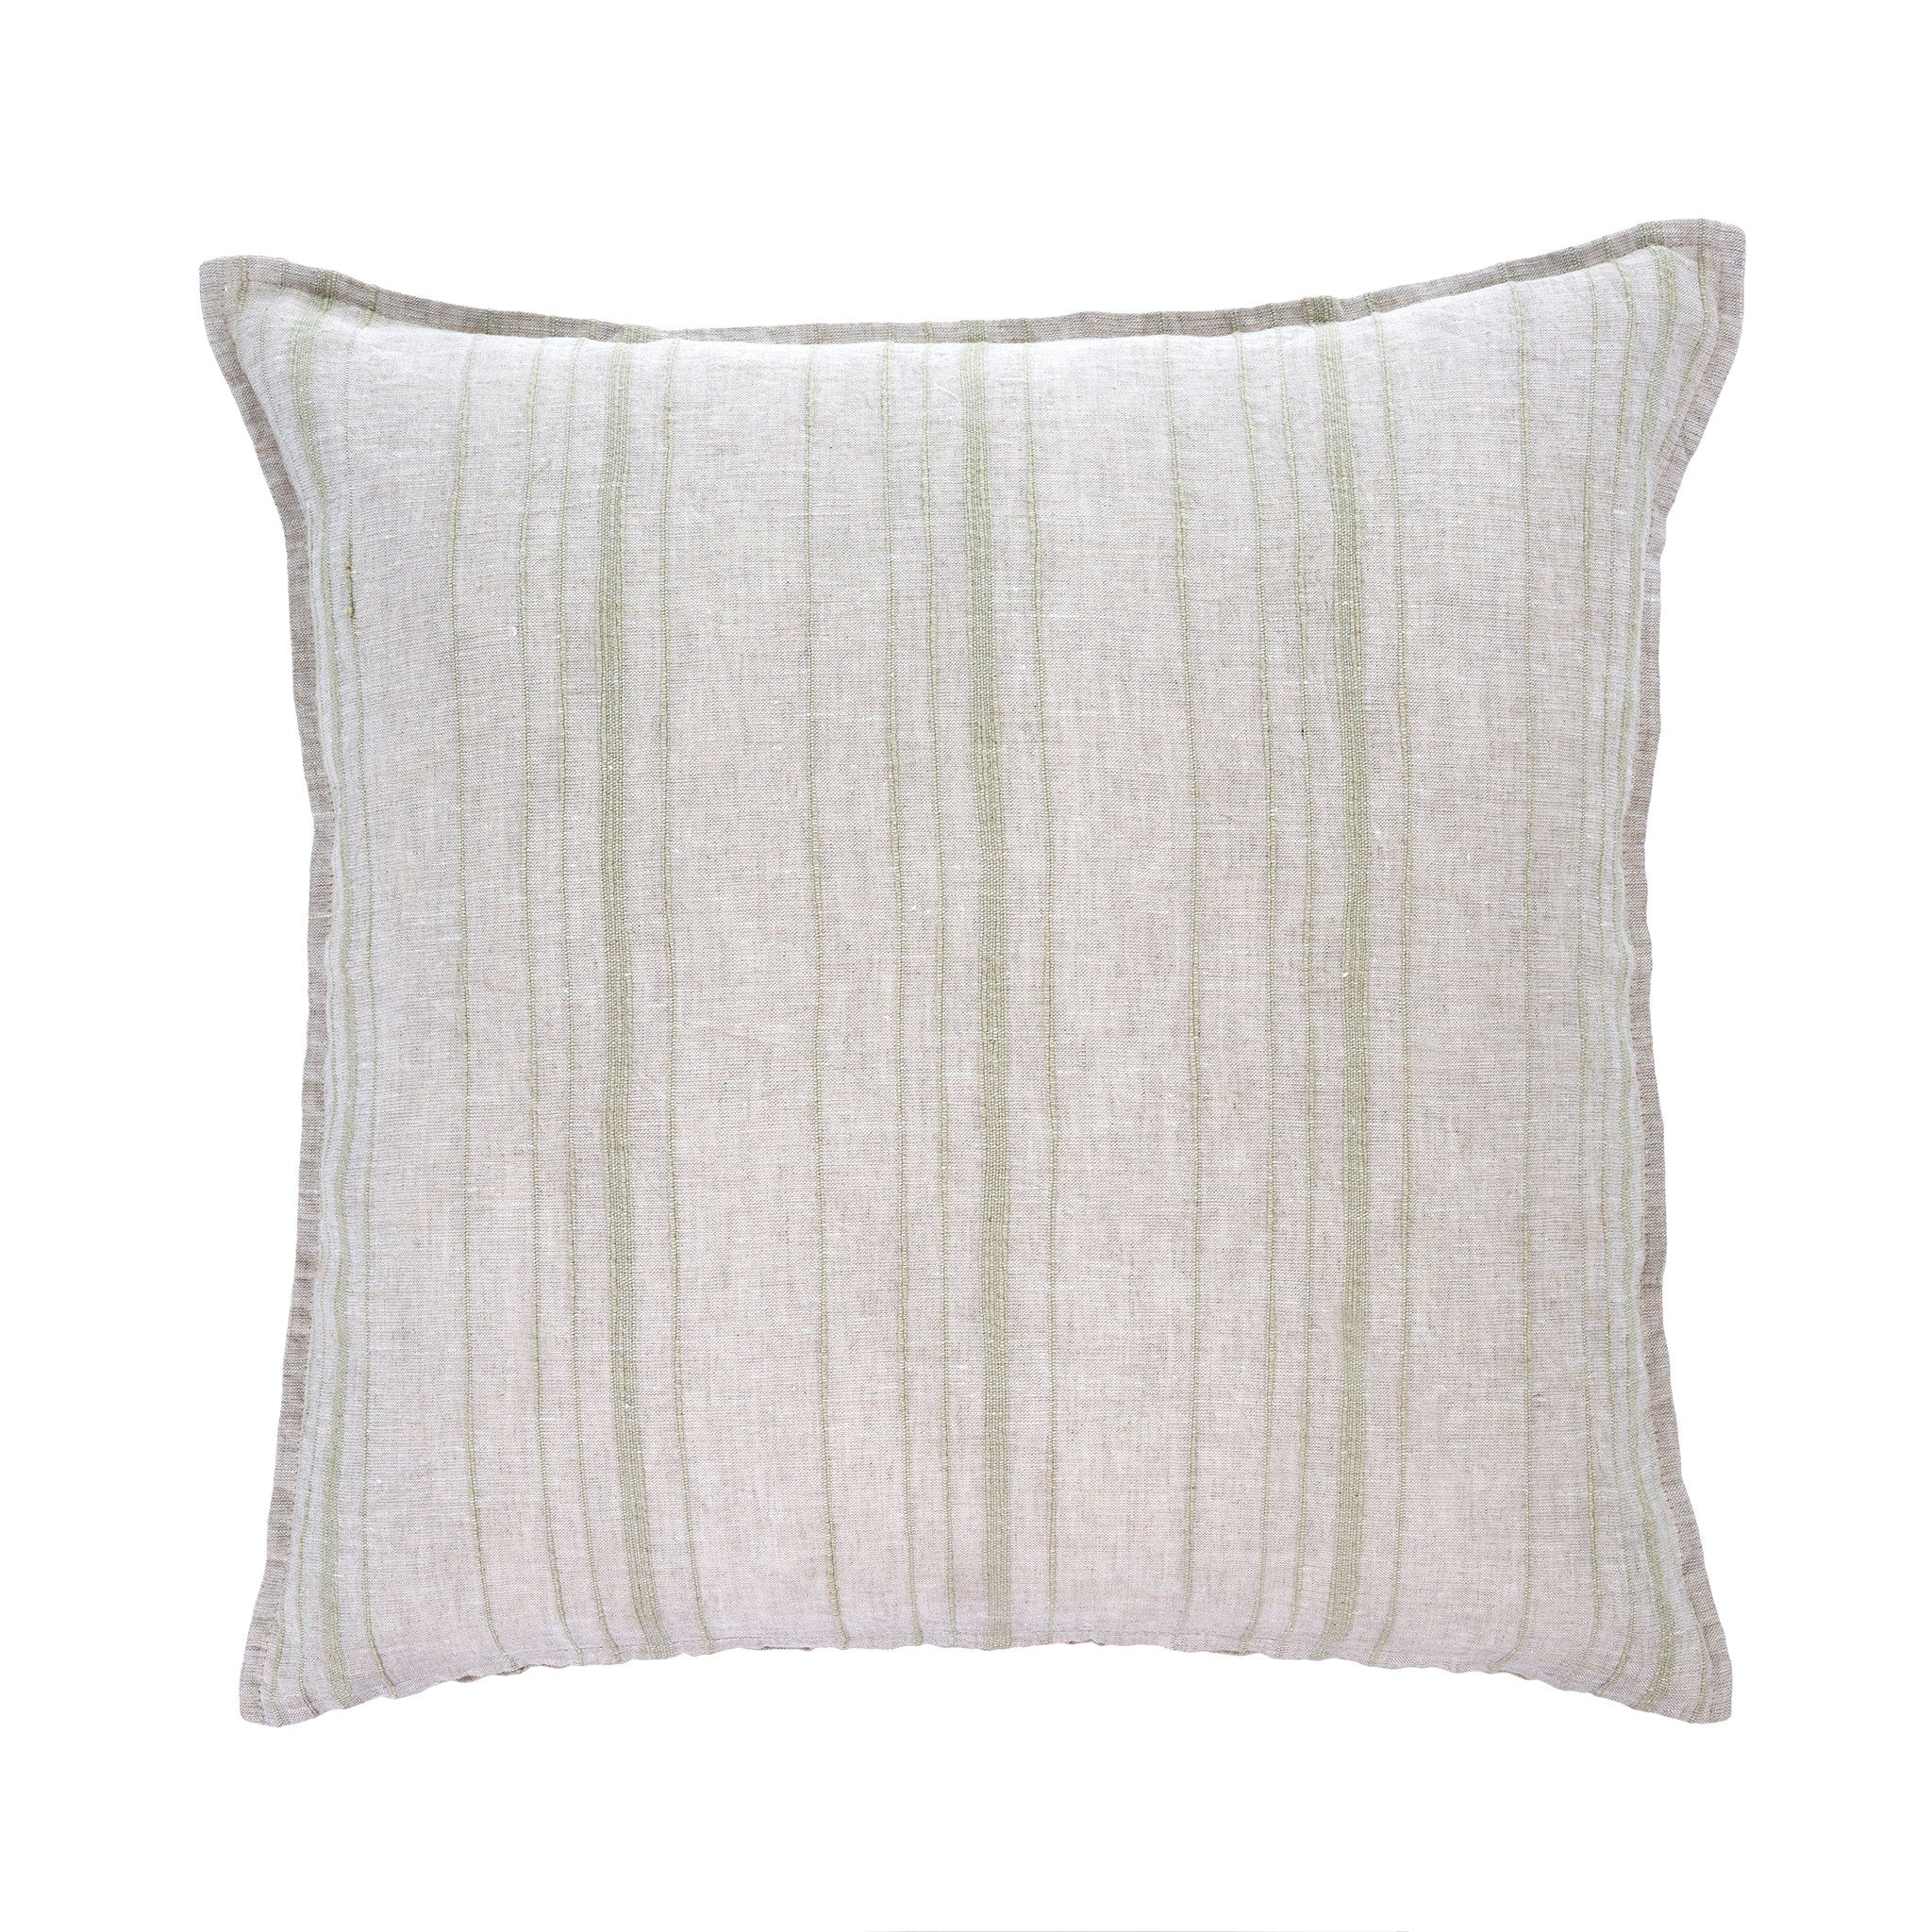 Luca Linen Pillows- 4 Colors